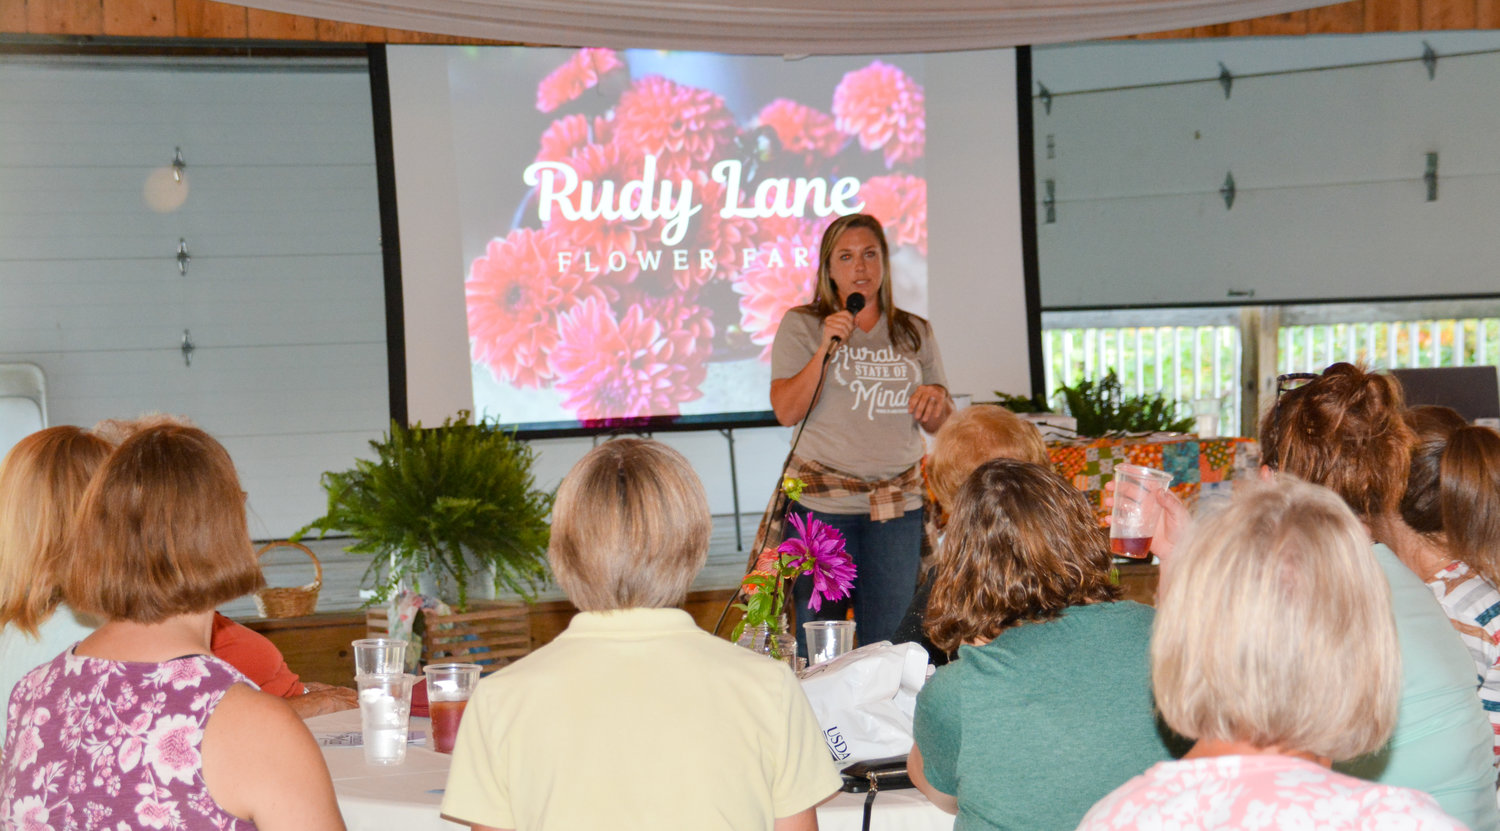 Megan Rudroff of Rudy Lane Flower Farm was the keynote speaker.